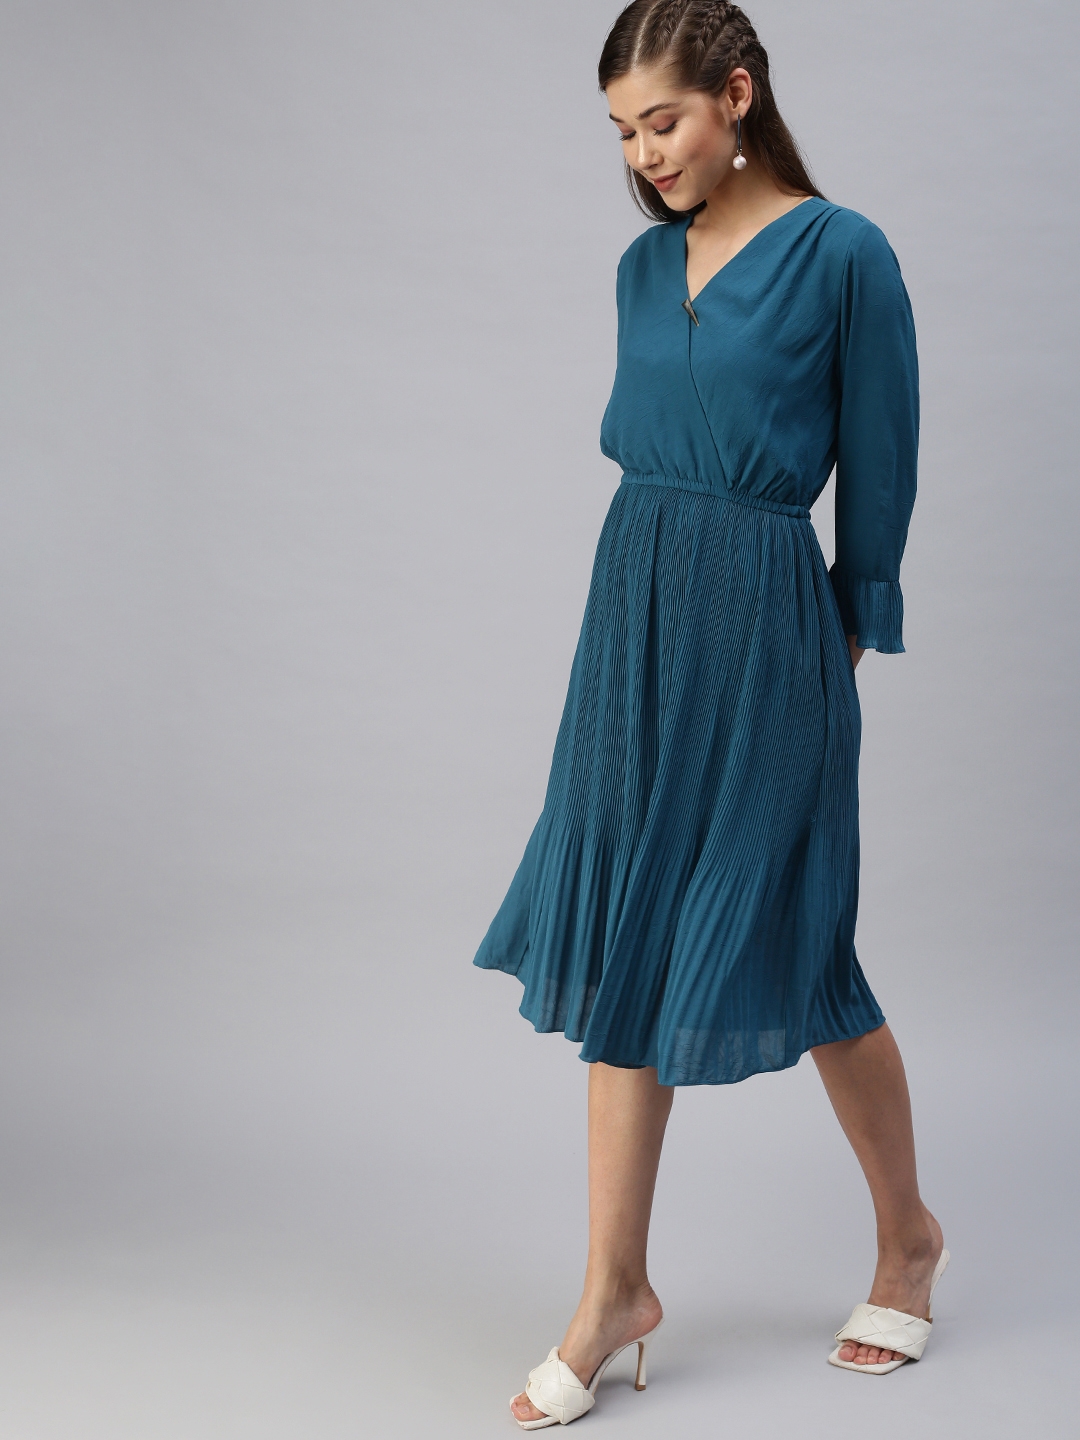 Women's Blue Georgette Solid Dresses